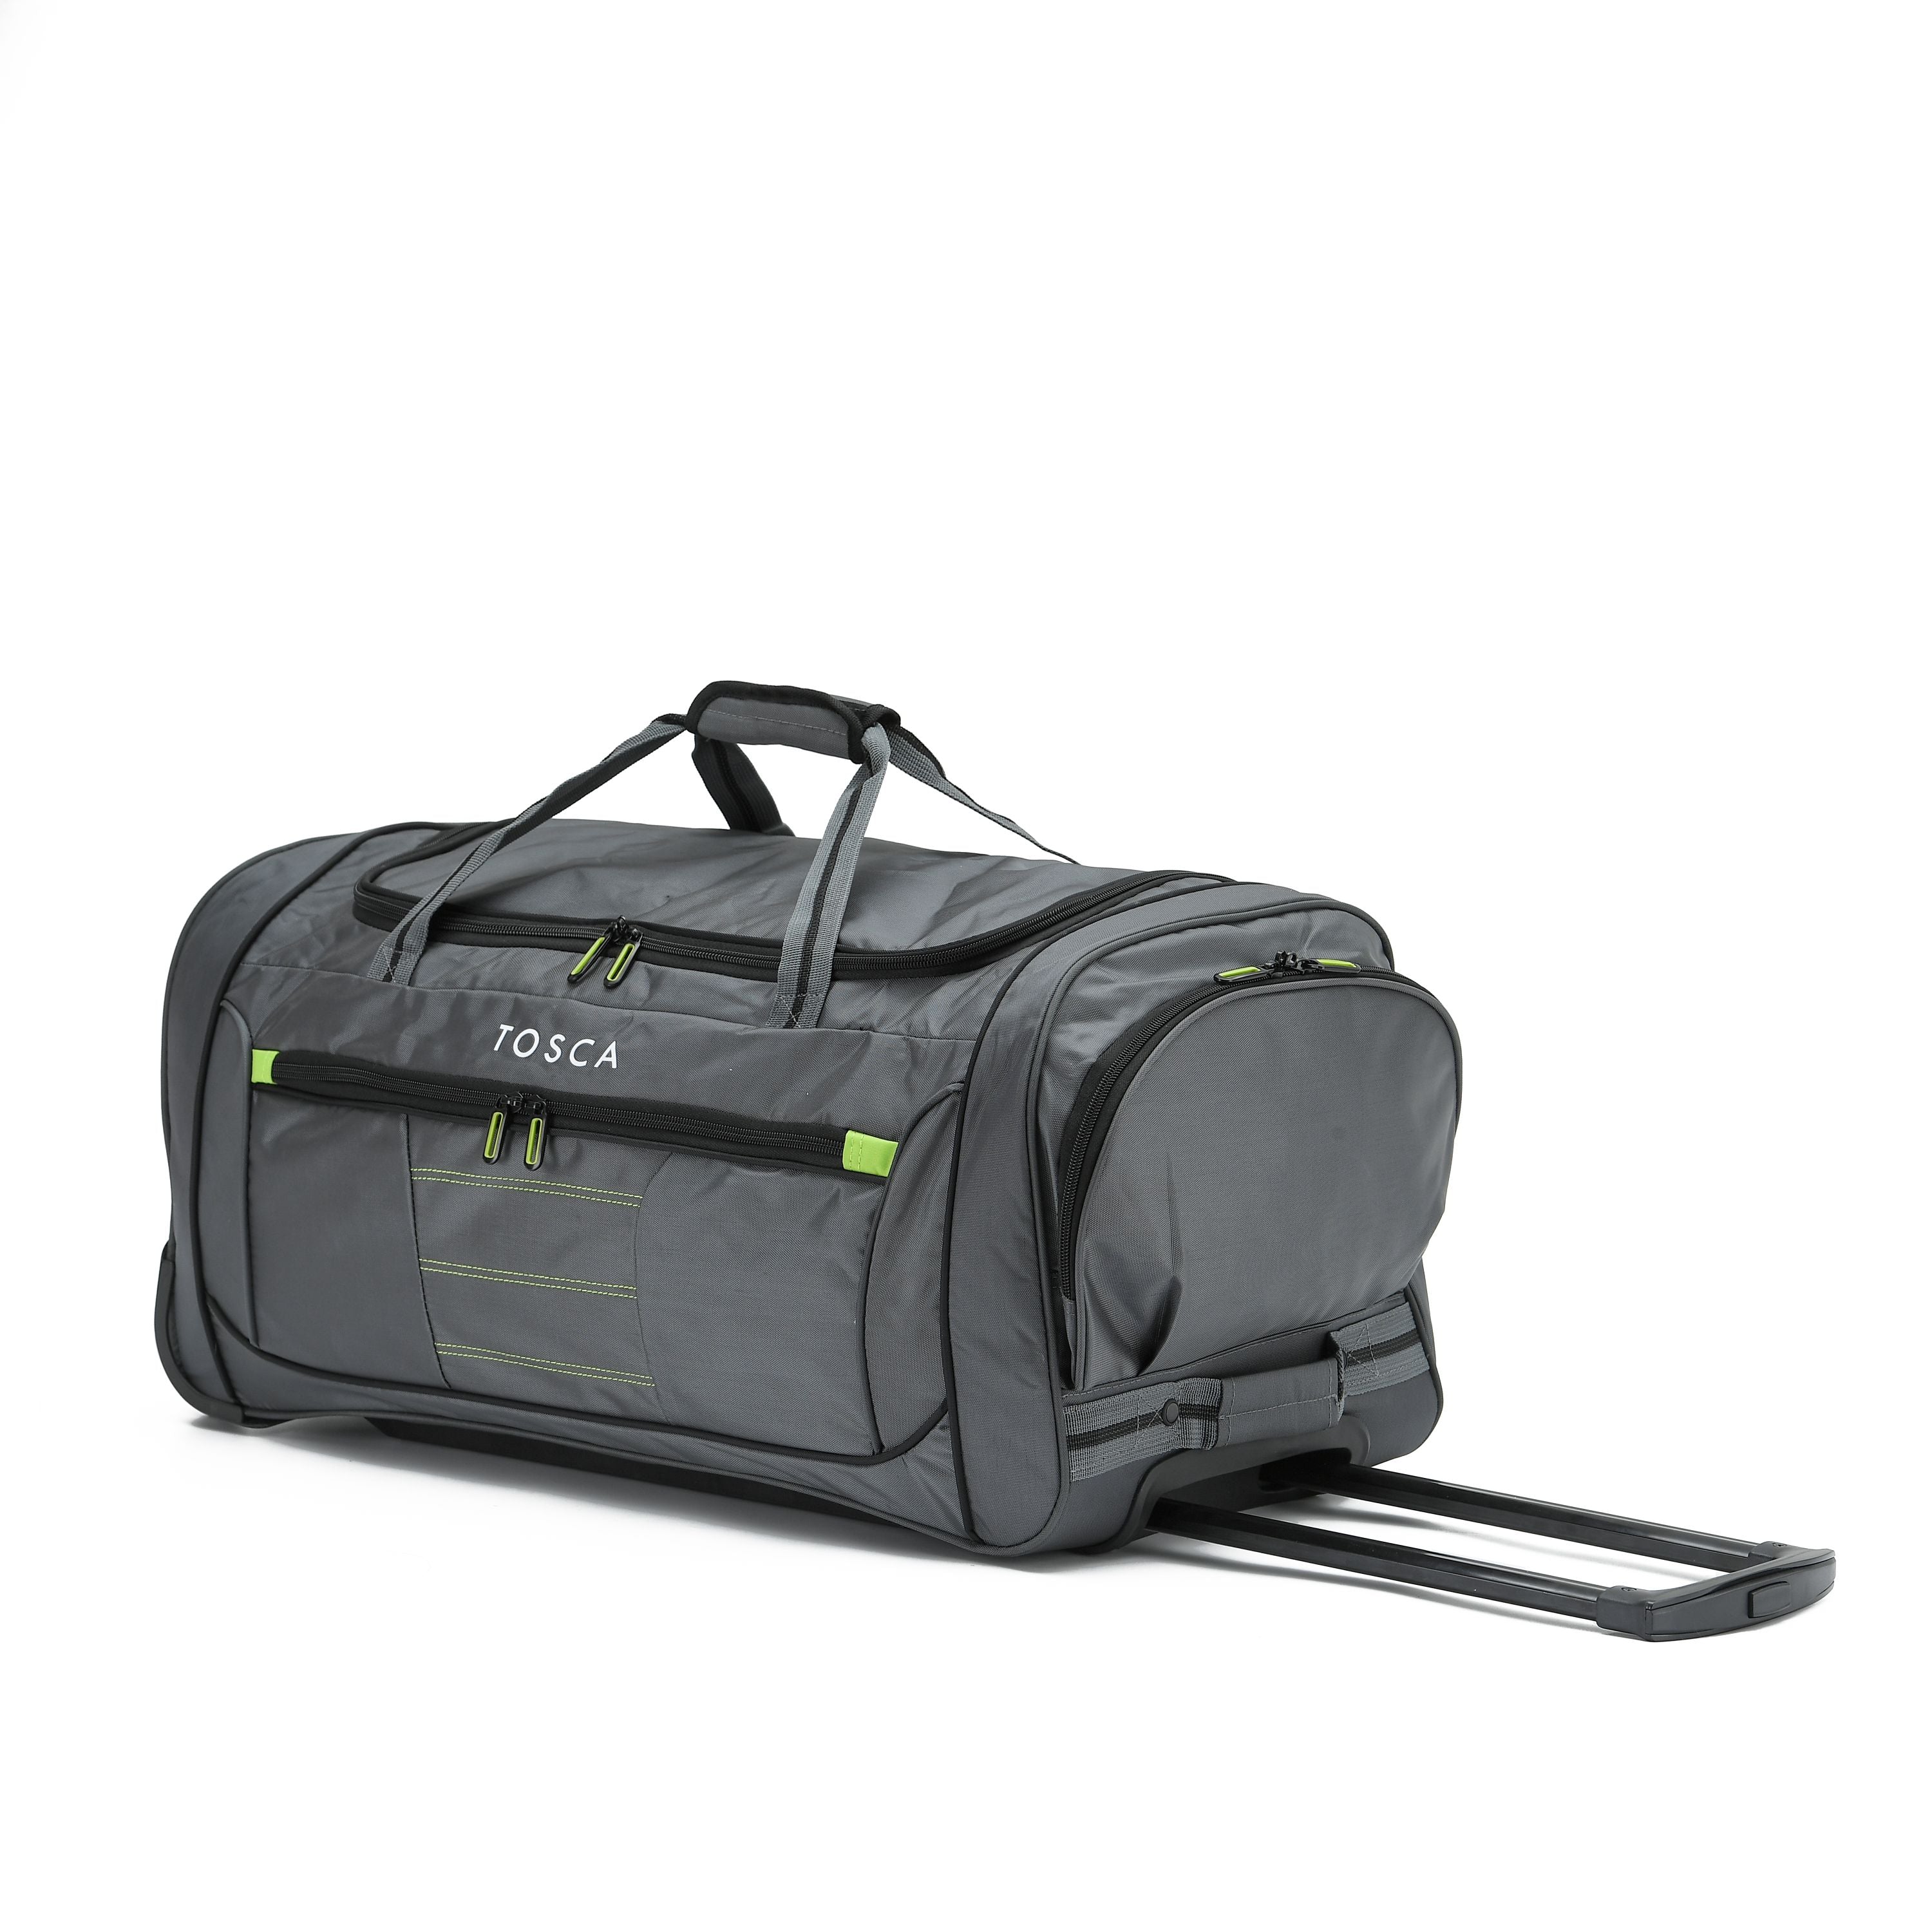 Tosca - TCA794TW/MB 70cm Medium Wheeled Duffle Bag - Grey/Lime - 0